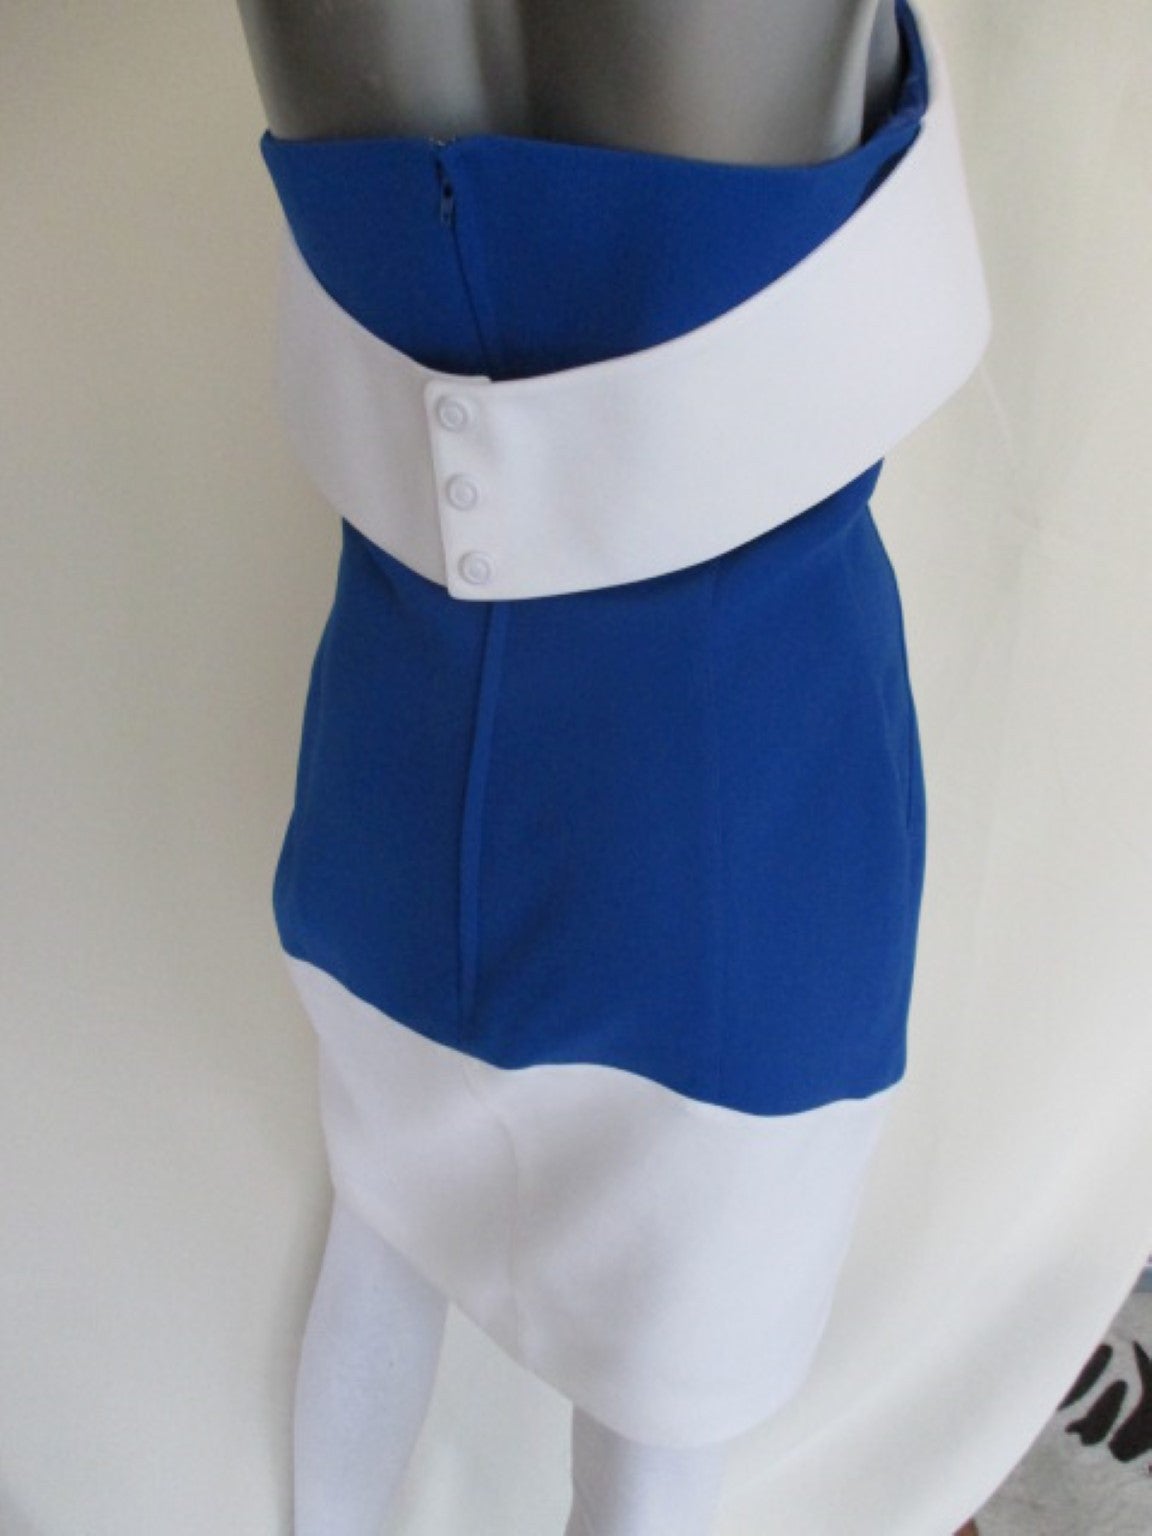 Women's Thierry mugler sleeveless blue & white dress